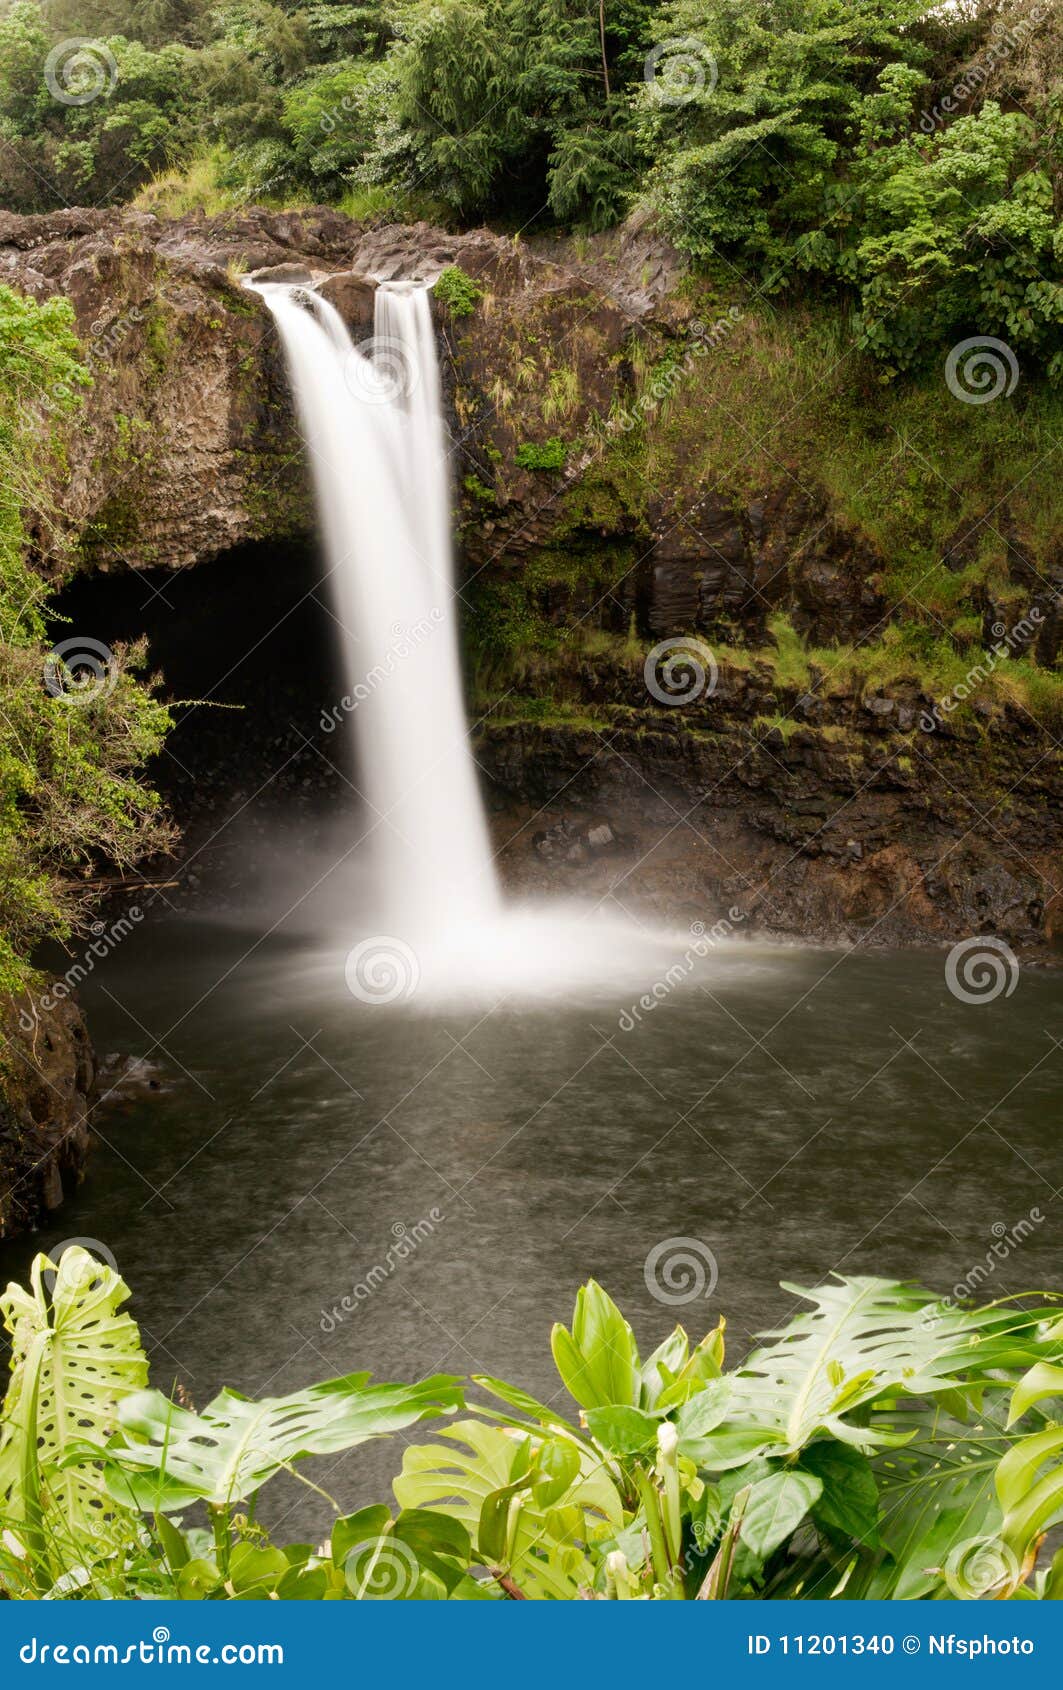 rainbow falls, wailuku river near hilo, hawaii